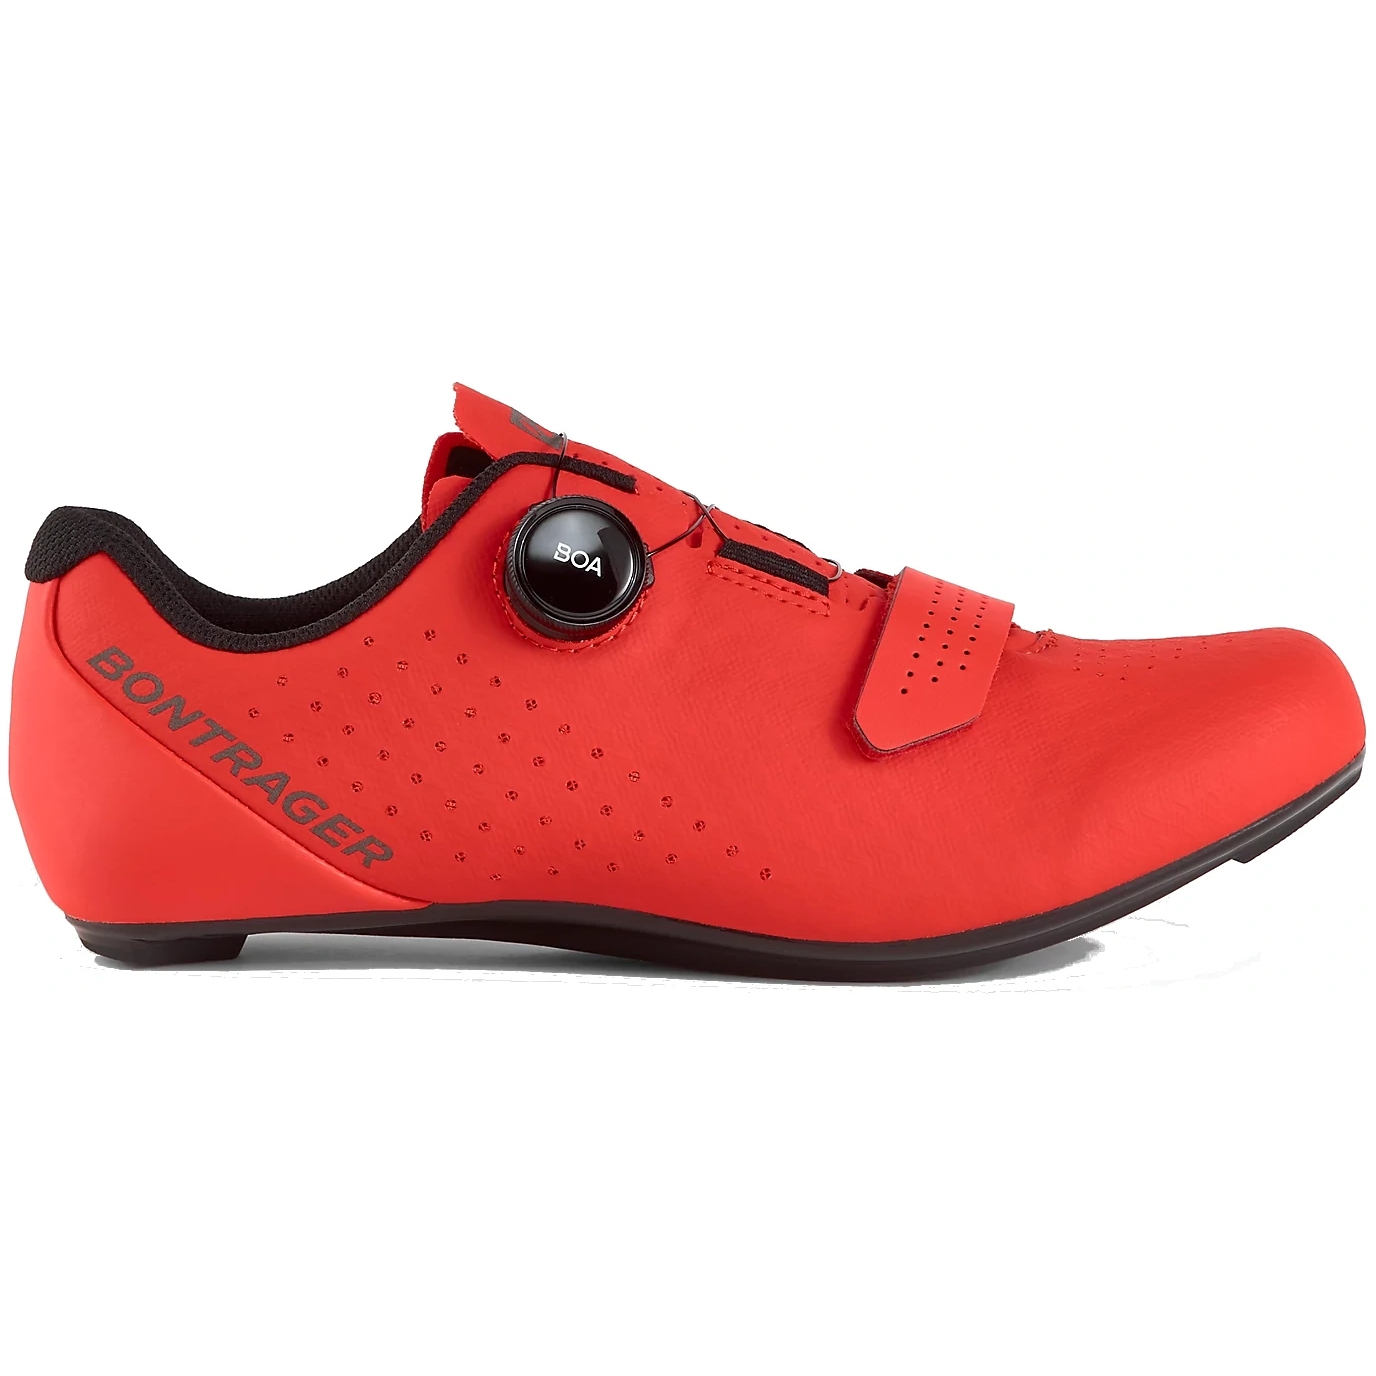 Productfoto van Bontrager Circuit Road Bike Shoe - red